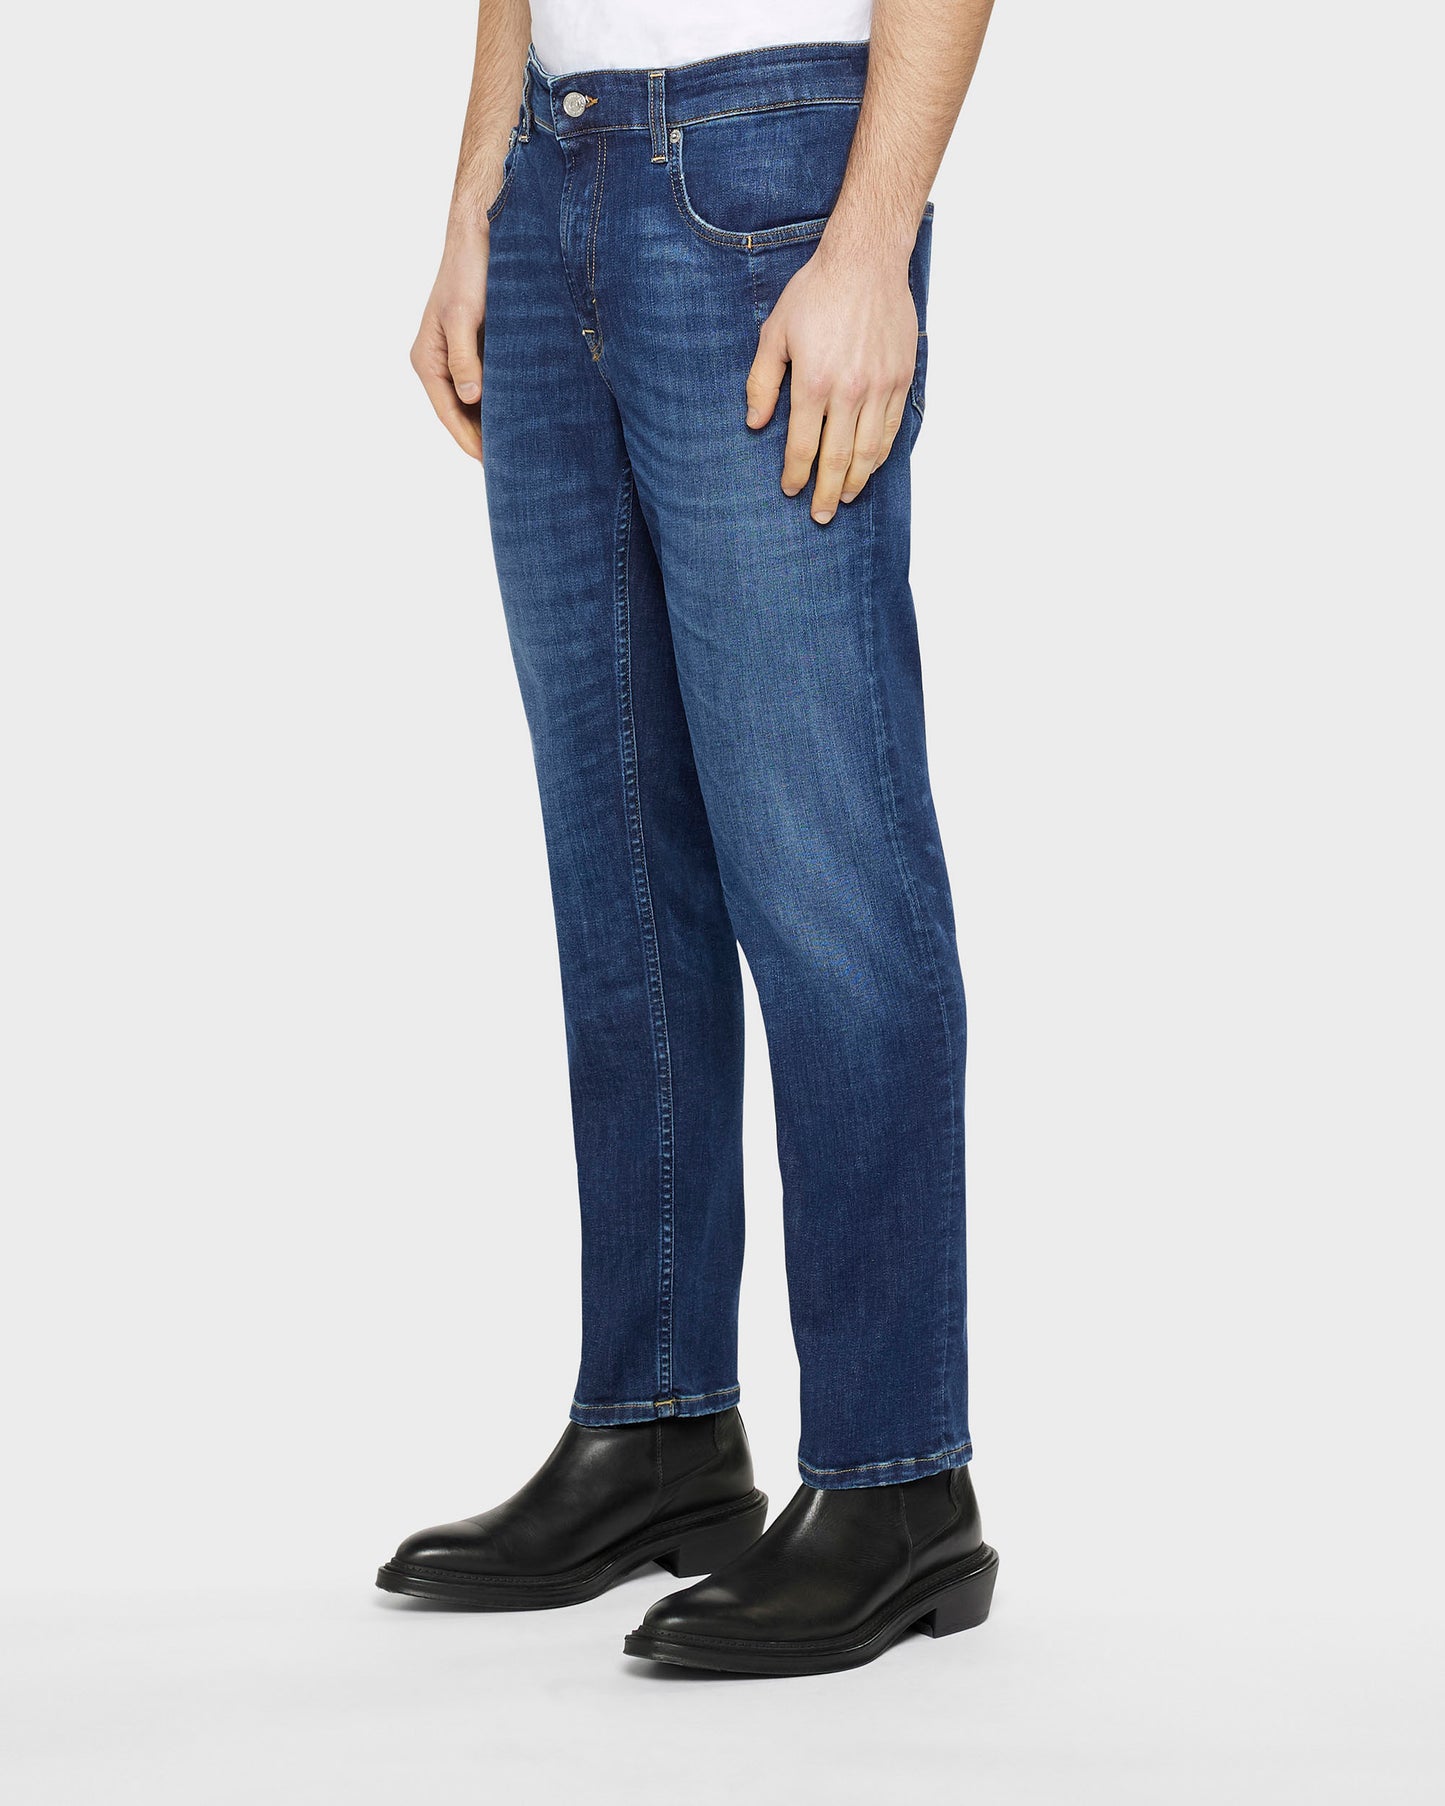 Corkey jeans regular-fit crop